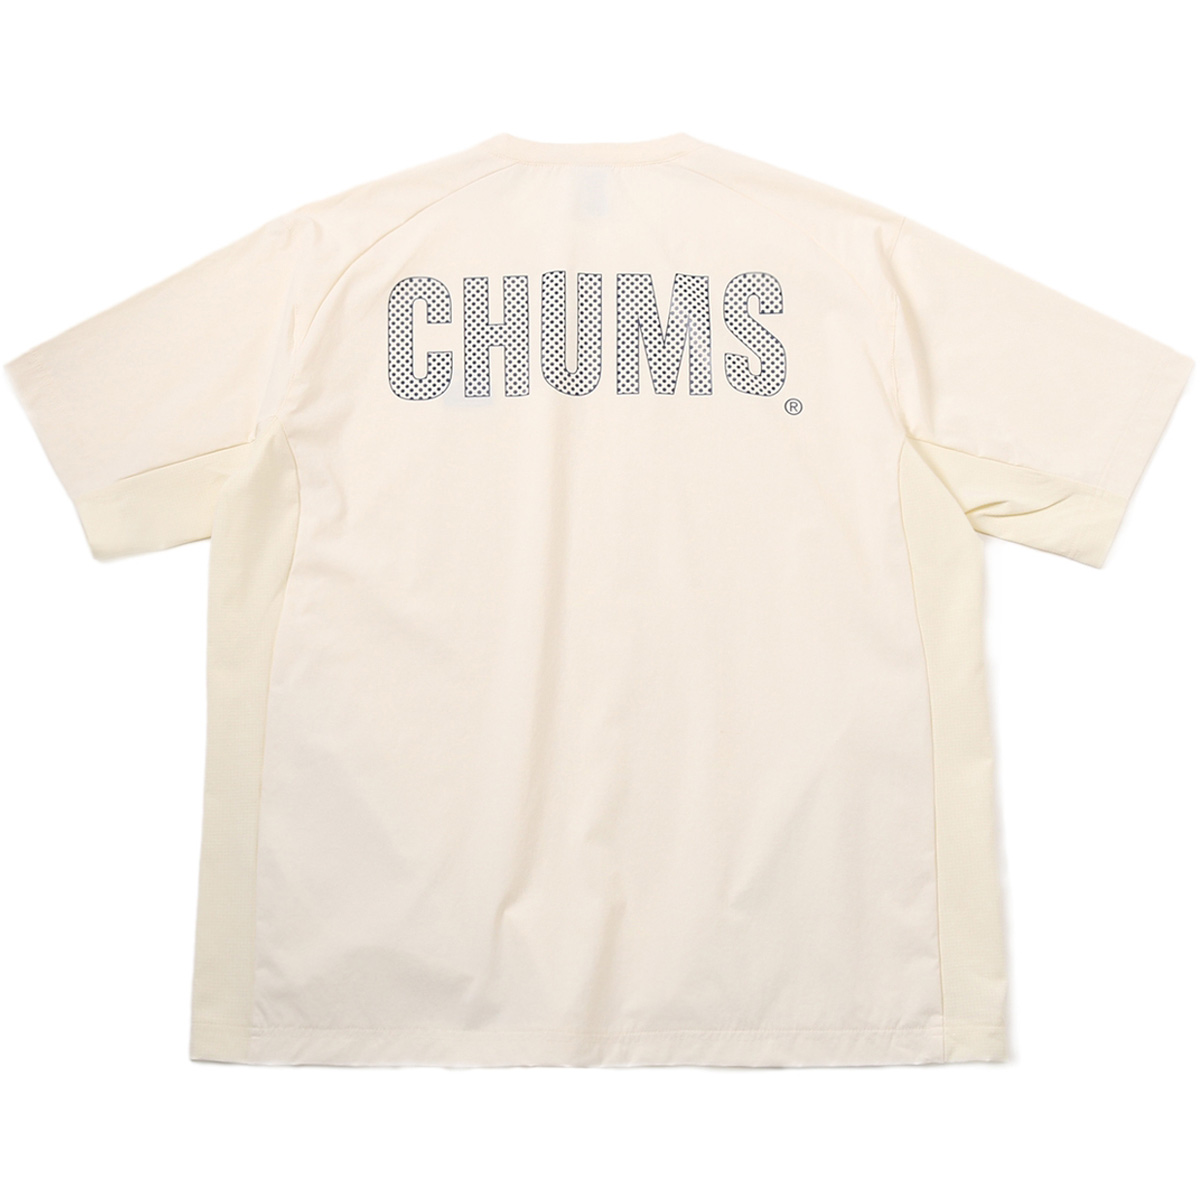 CHUMS チャムス 半袖 Airtrail Stretch CHUMS T-Shirt エアトレイ...